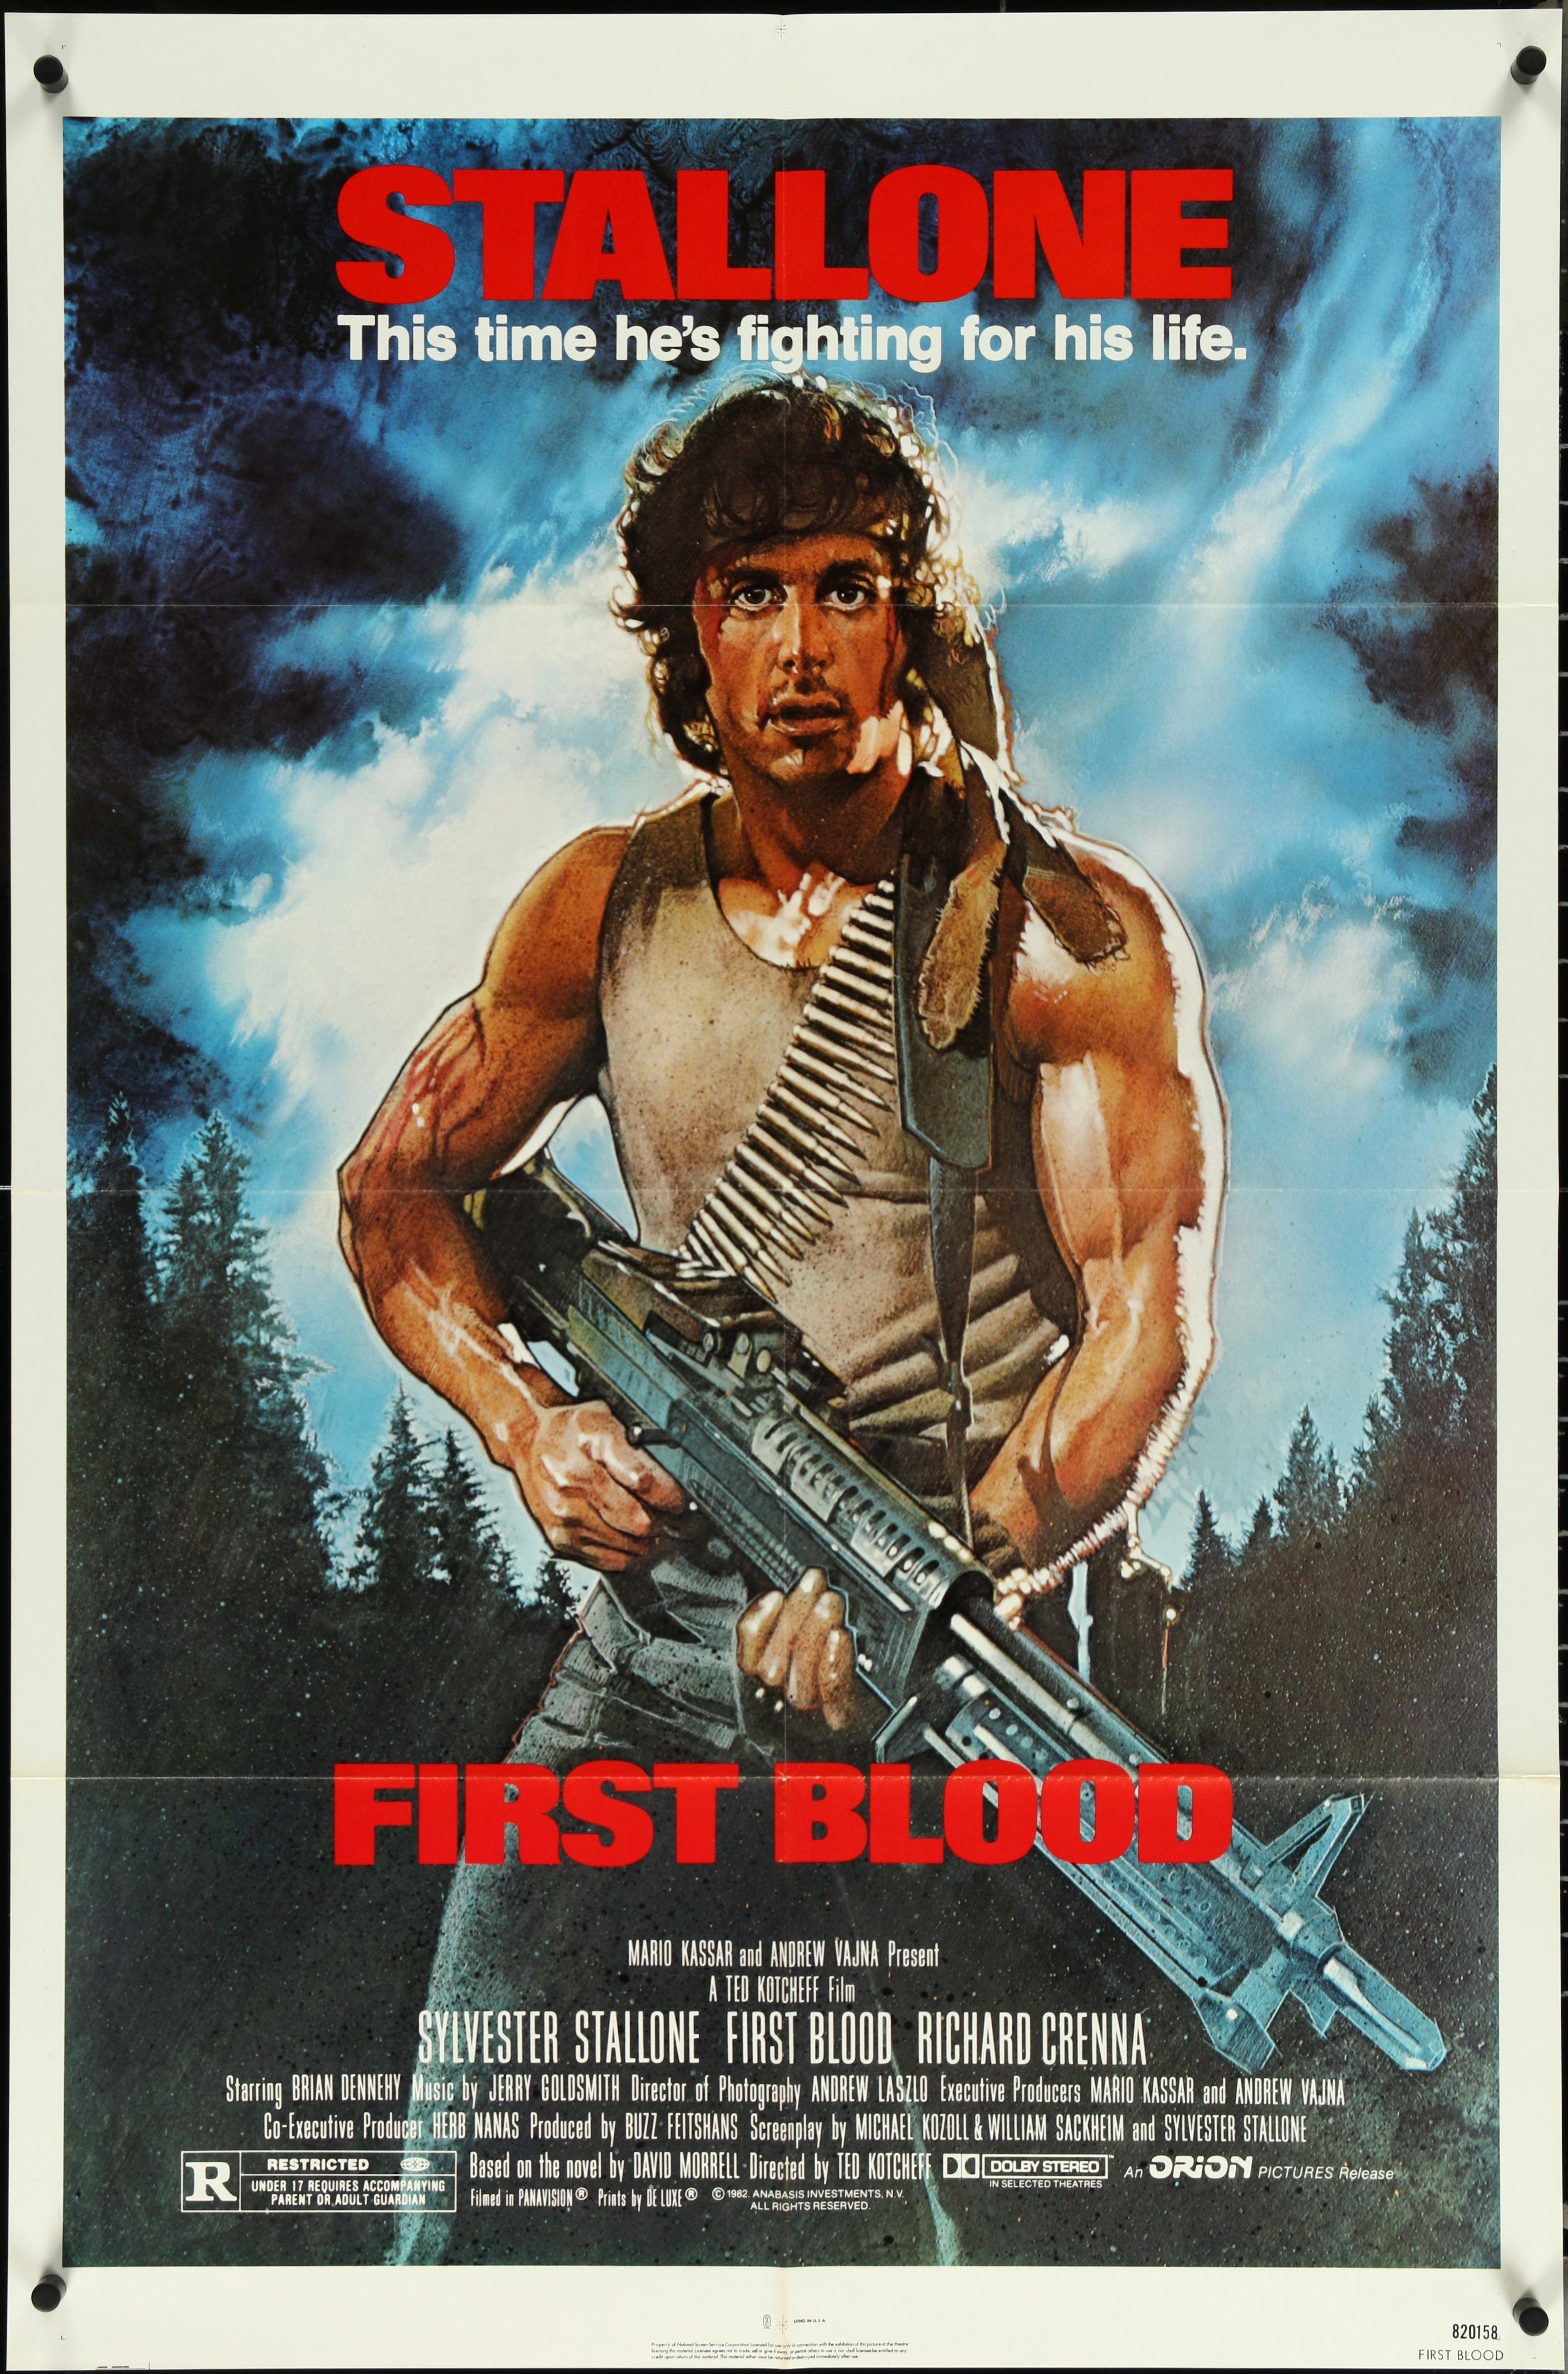 FIRST BLOOD (1982)